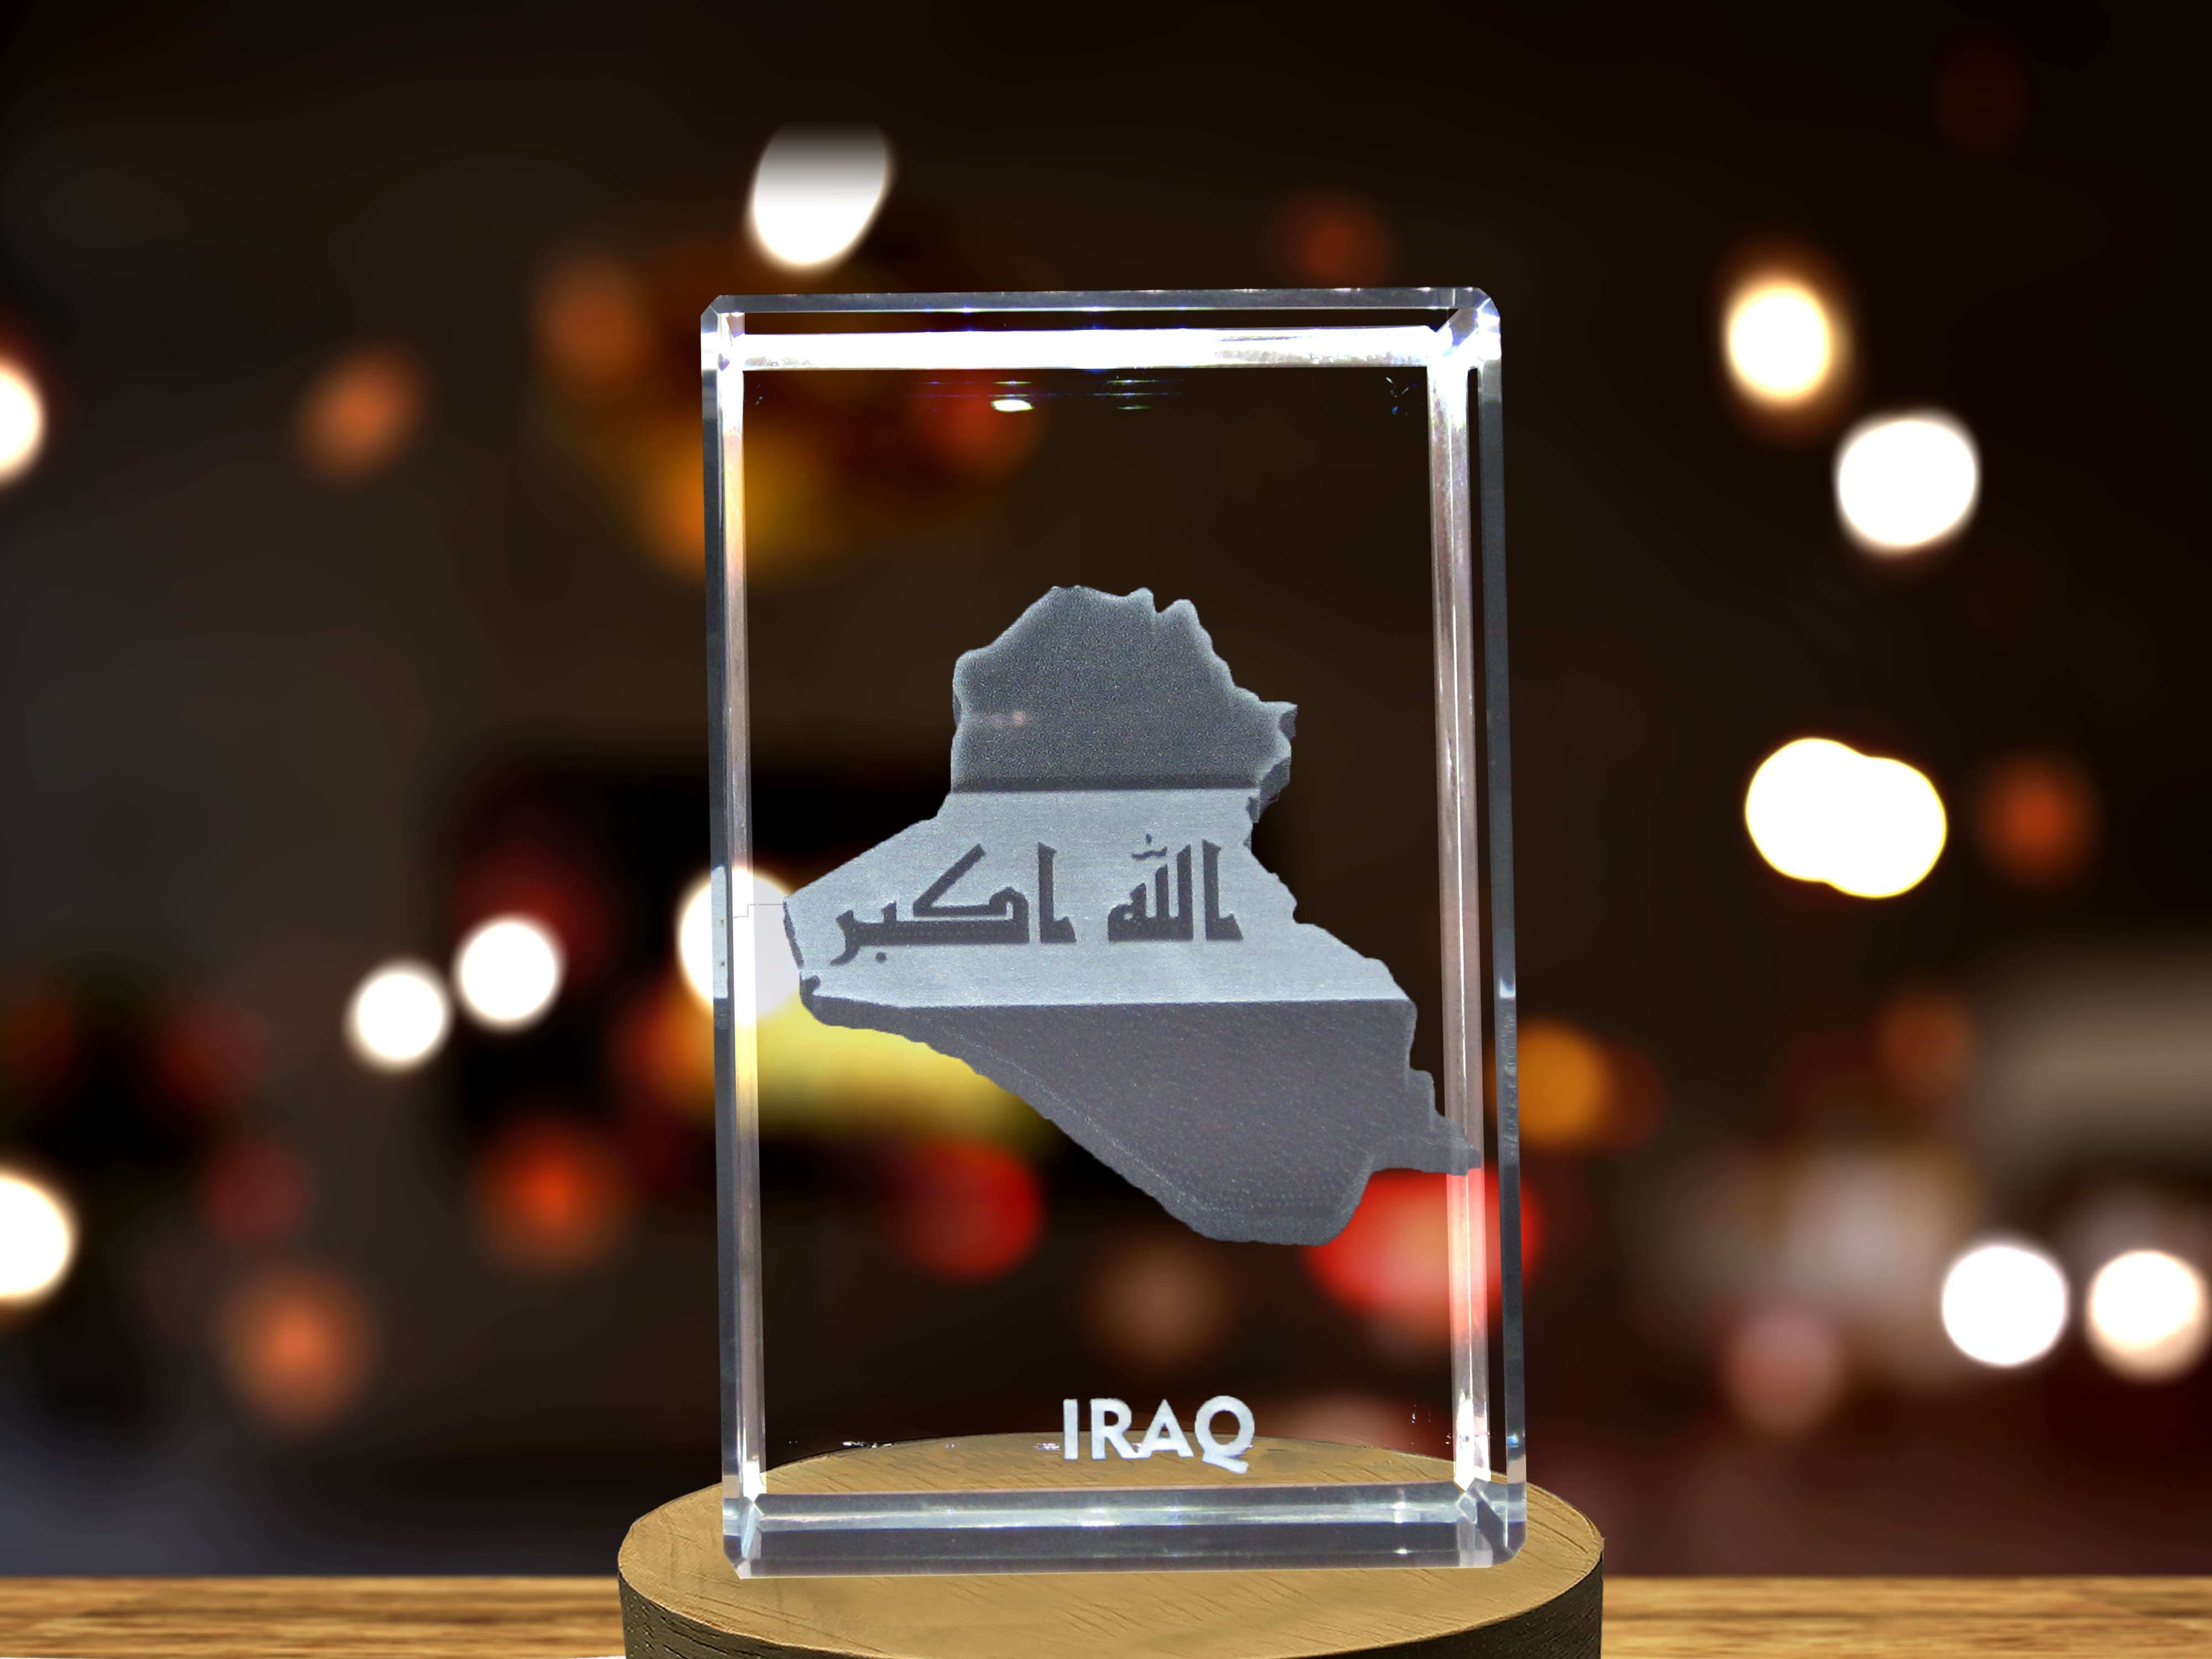 Iraq 3D Engraved Crystal 3D Engraved Crystal Keepsake/Gift/Decor/Collectible/Souvenir A&B Crystal Collection